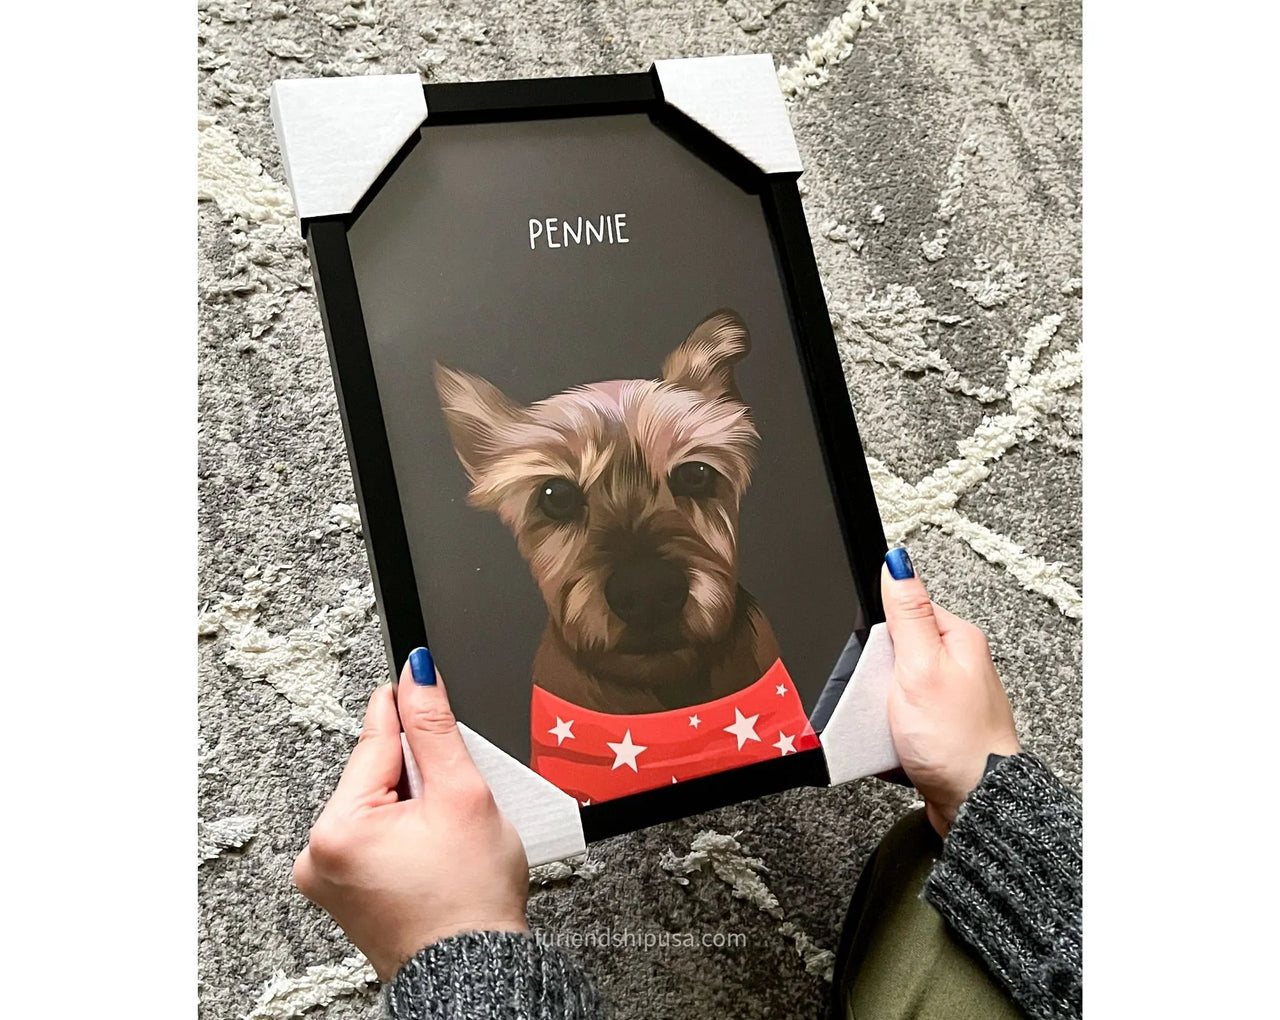 Furiendship Single Pet Digital Art Painting in a Frame